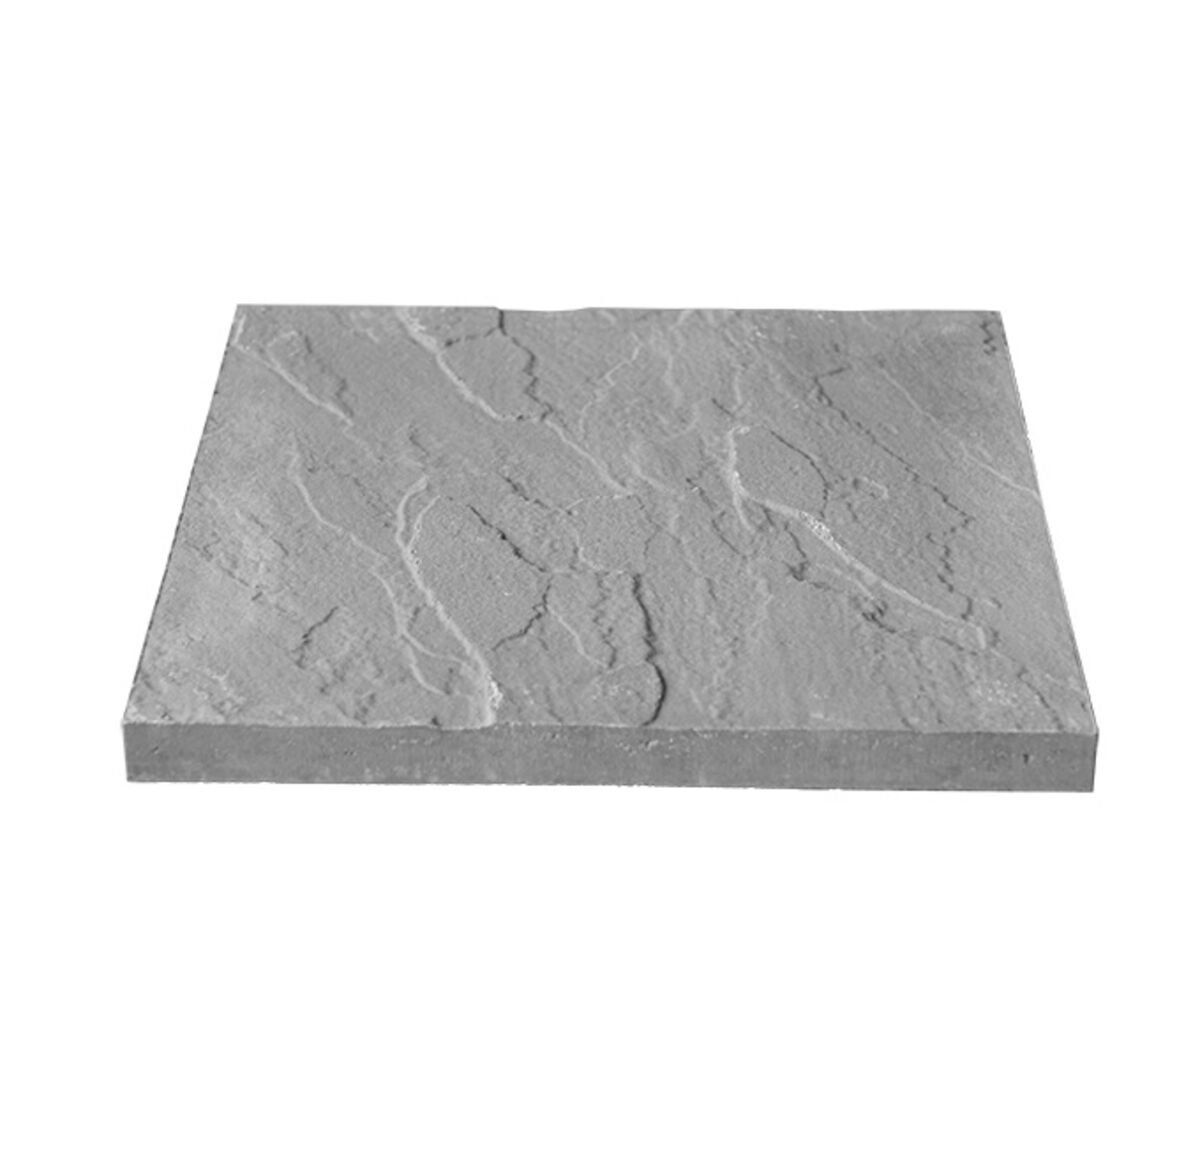 Essential riven Paving stone 450x450.jpg